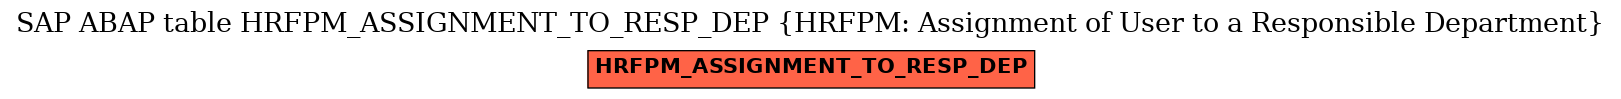 E-R Diagram for table HRFPM_ASSIGNMENT_TO_RESP_DEP (HRFPM: Assignment of User to a Responsible Department)